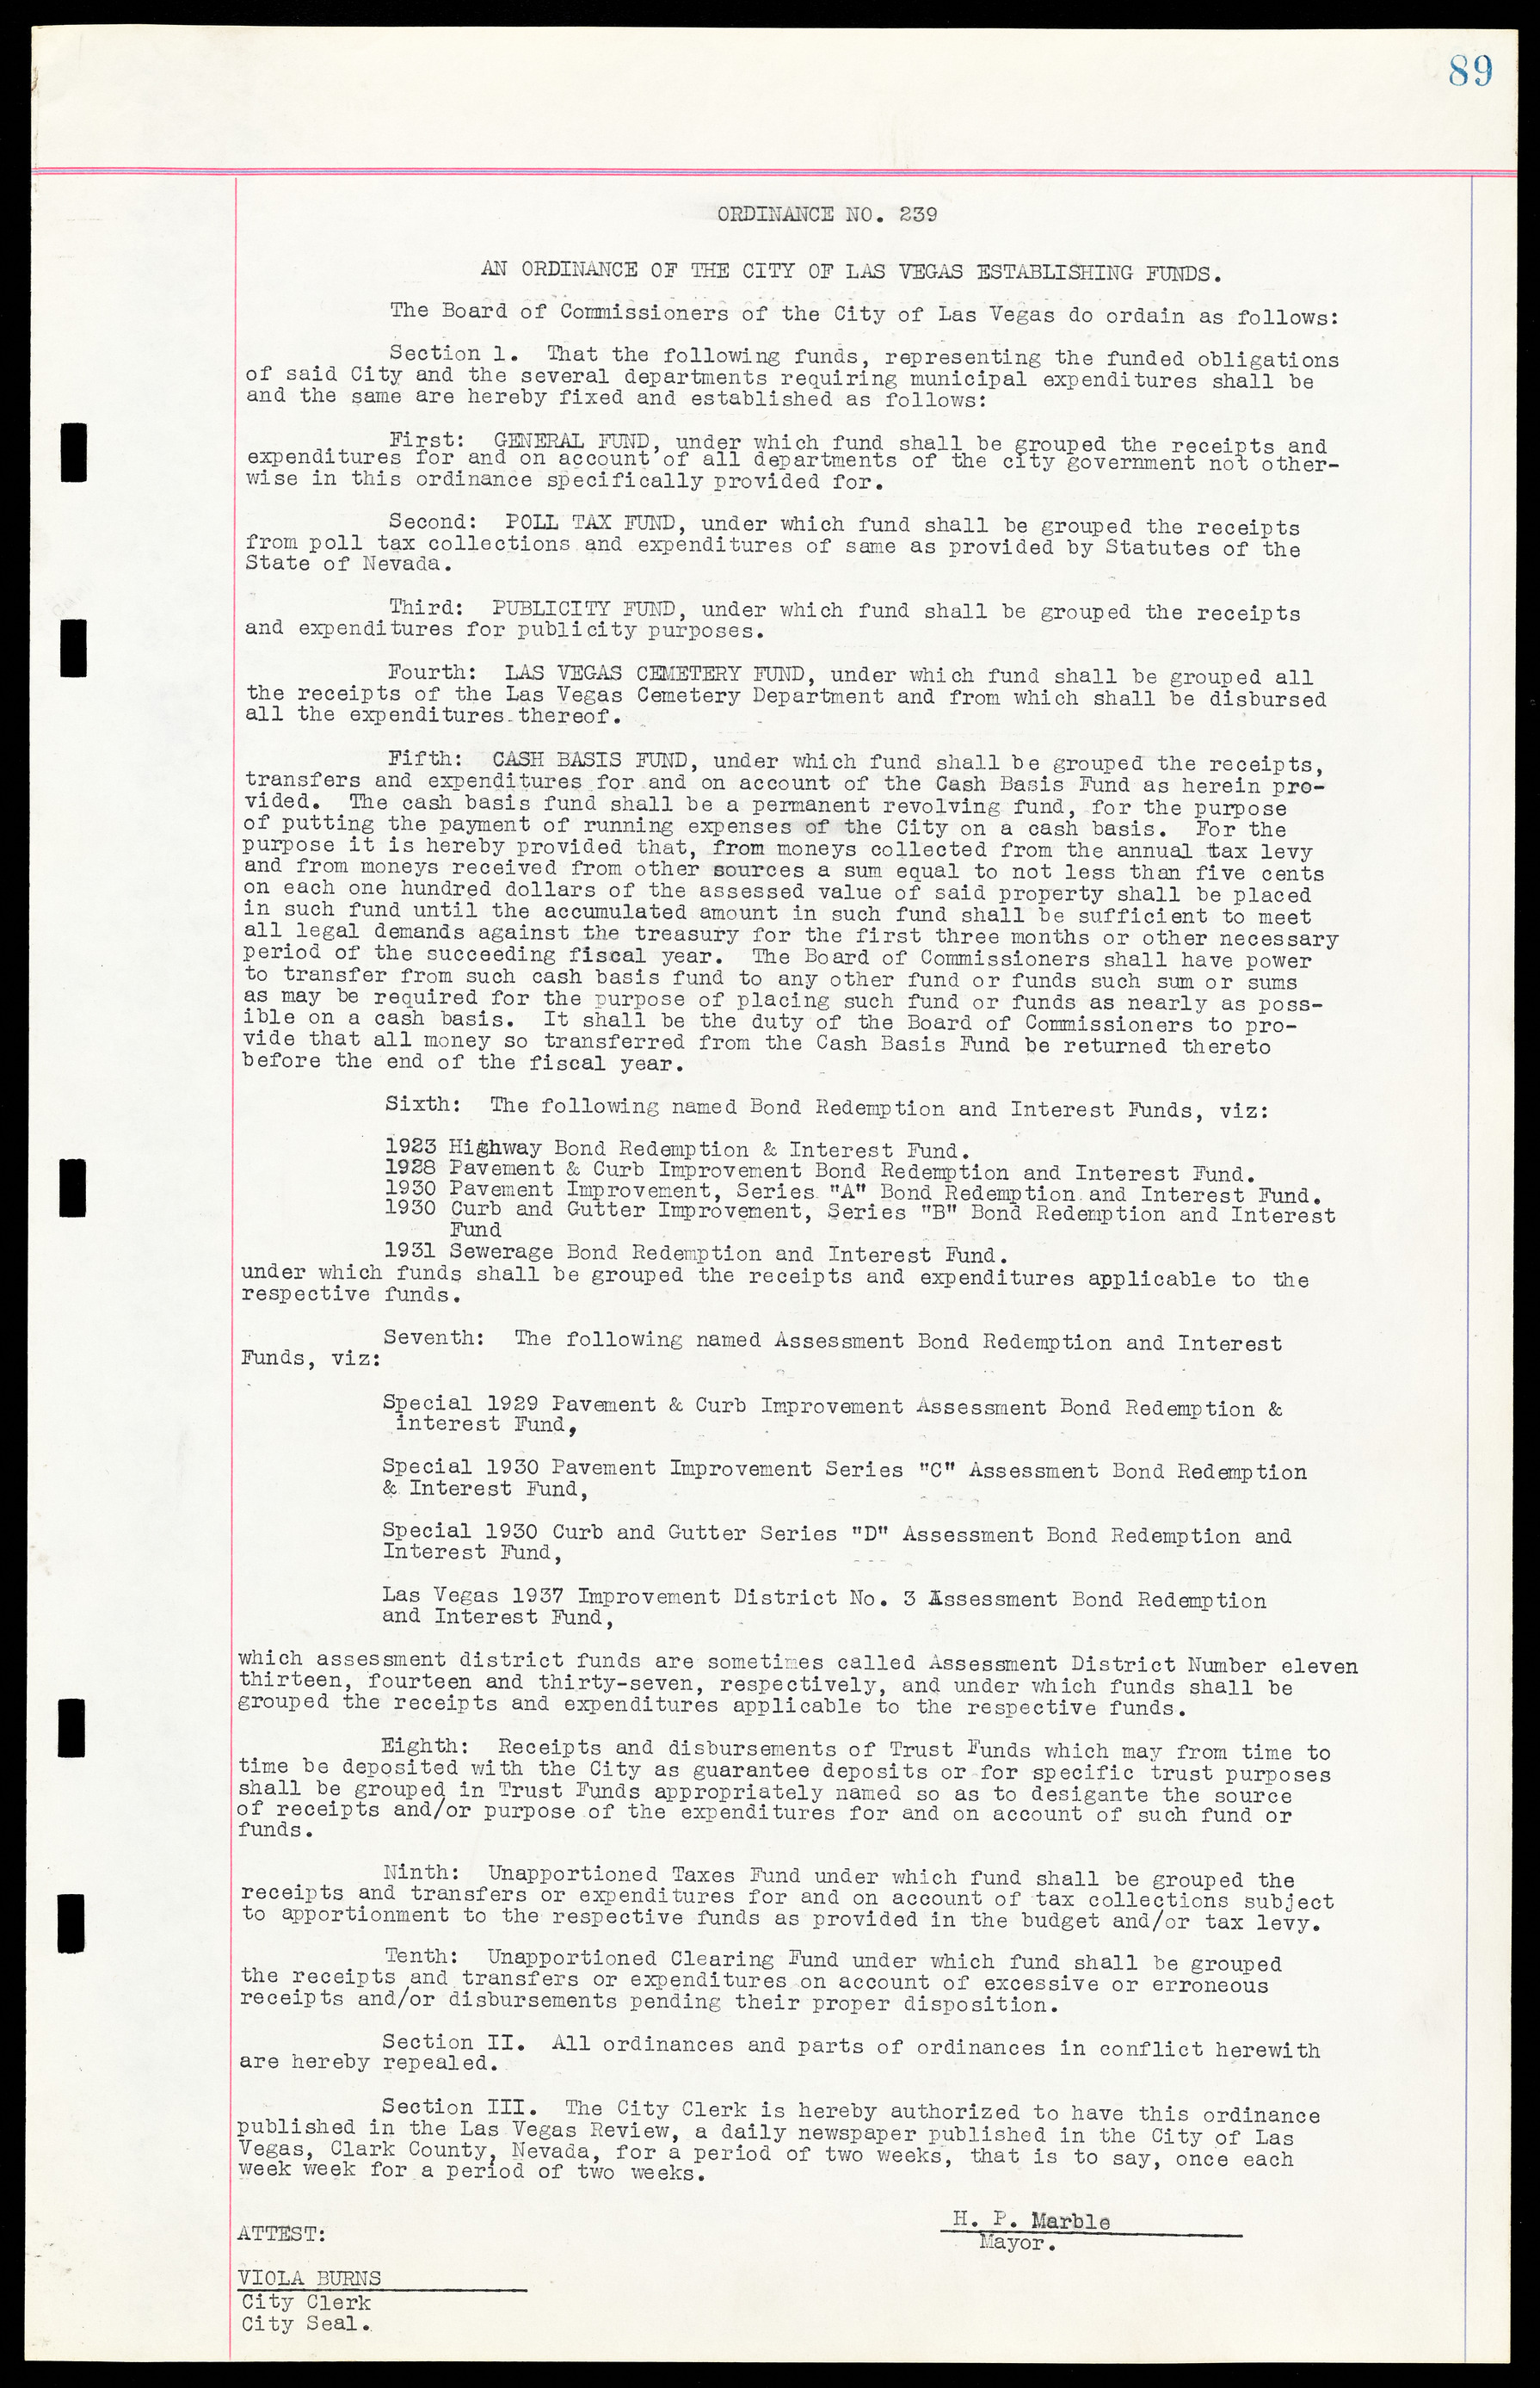 Las Vegas City Ordinances, March 31, 1933 to October 25, 1950, lvc000014-107